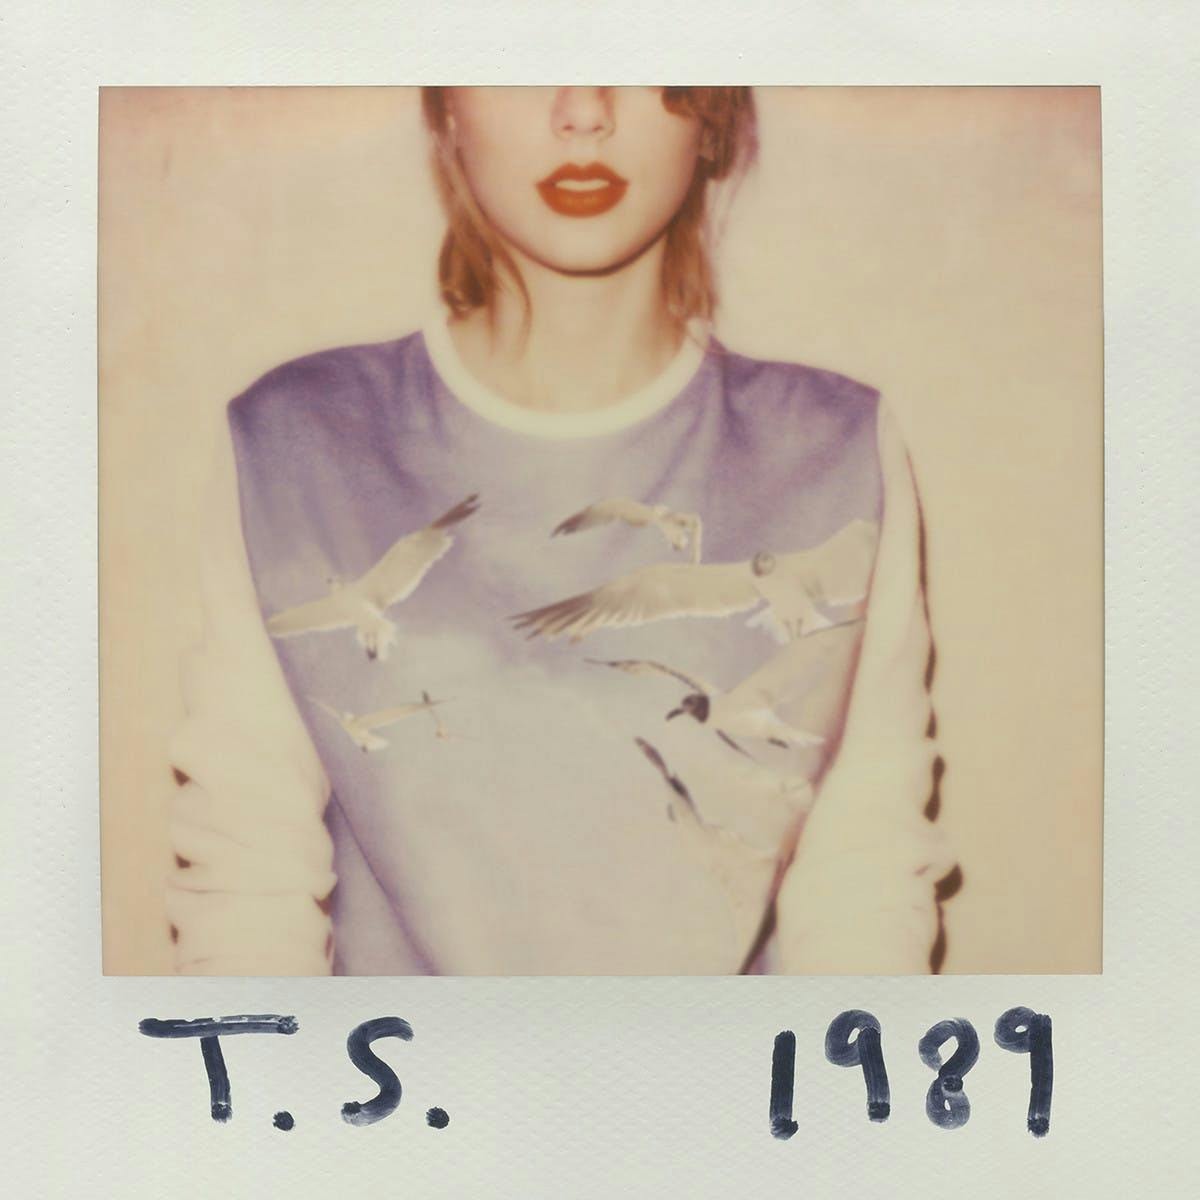 Taylor Swift's 1989 Album cover